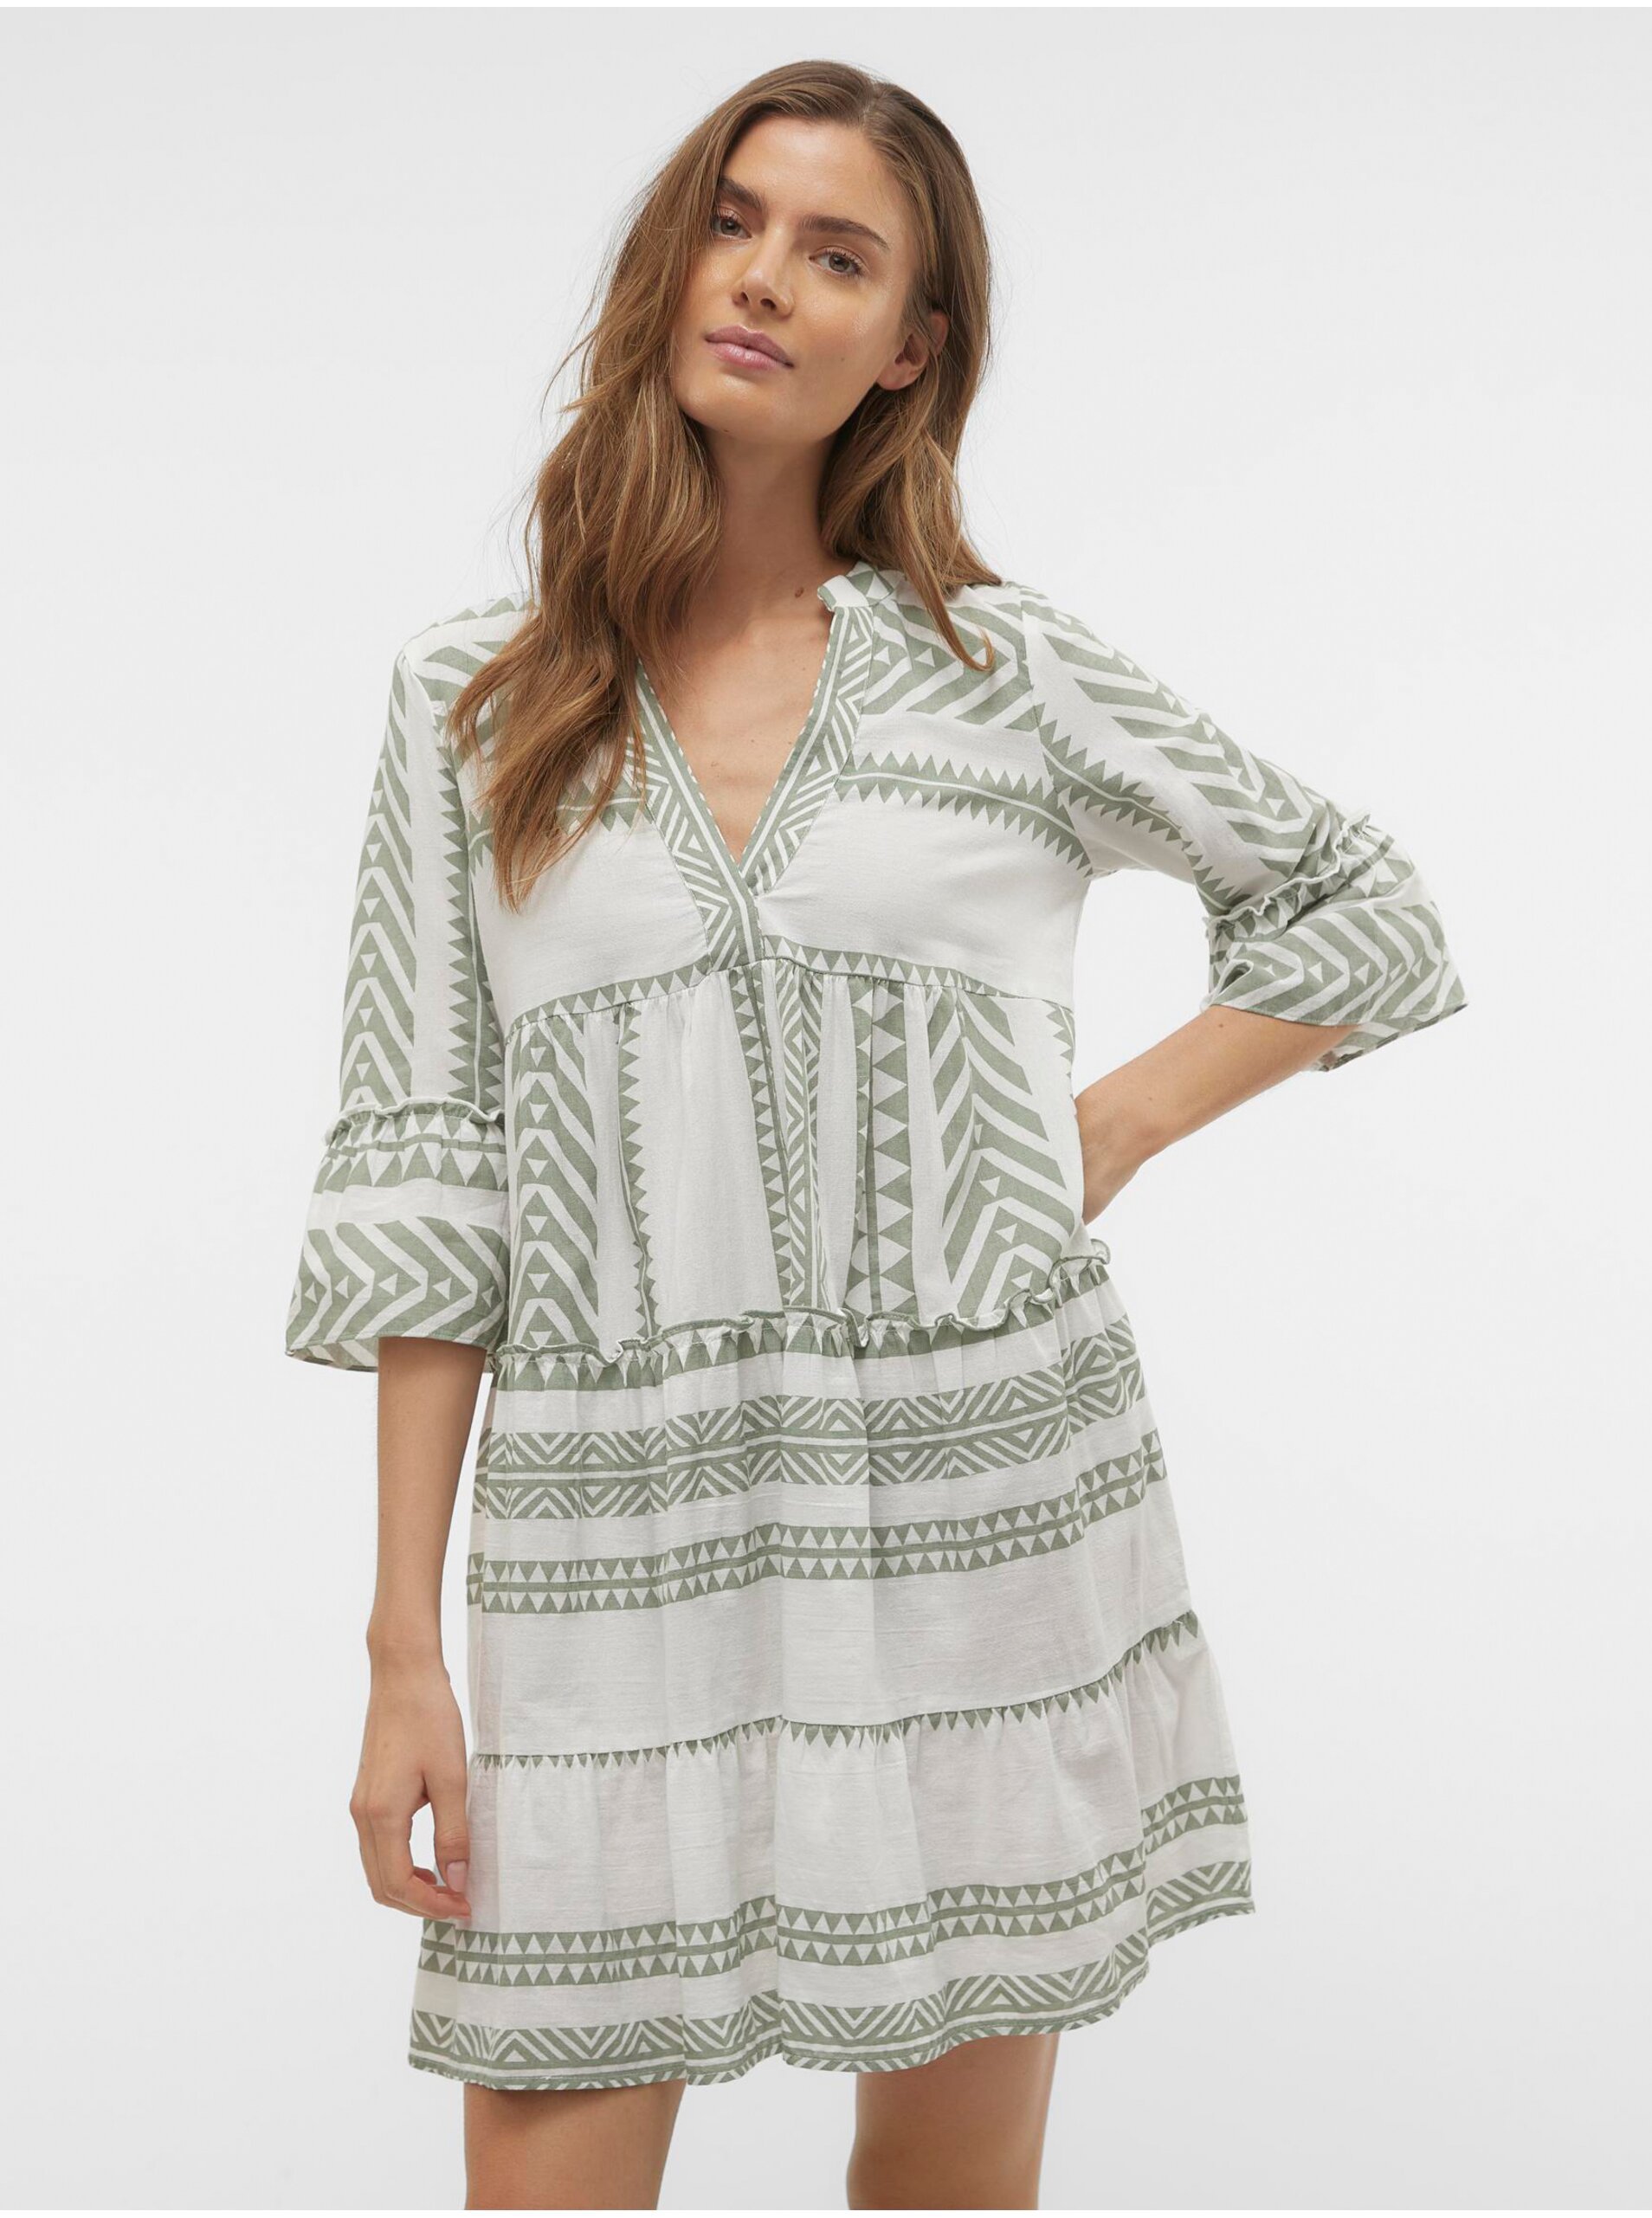 Green and White Women's Patterned Dress Vero Moda Dicthe - Women's